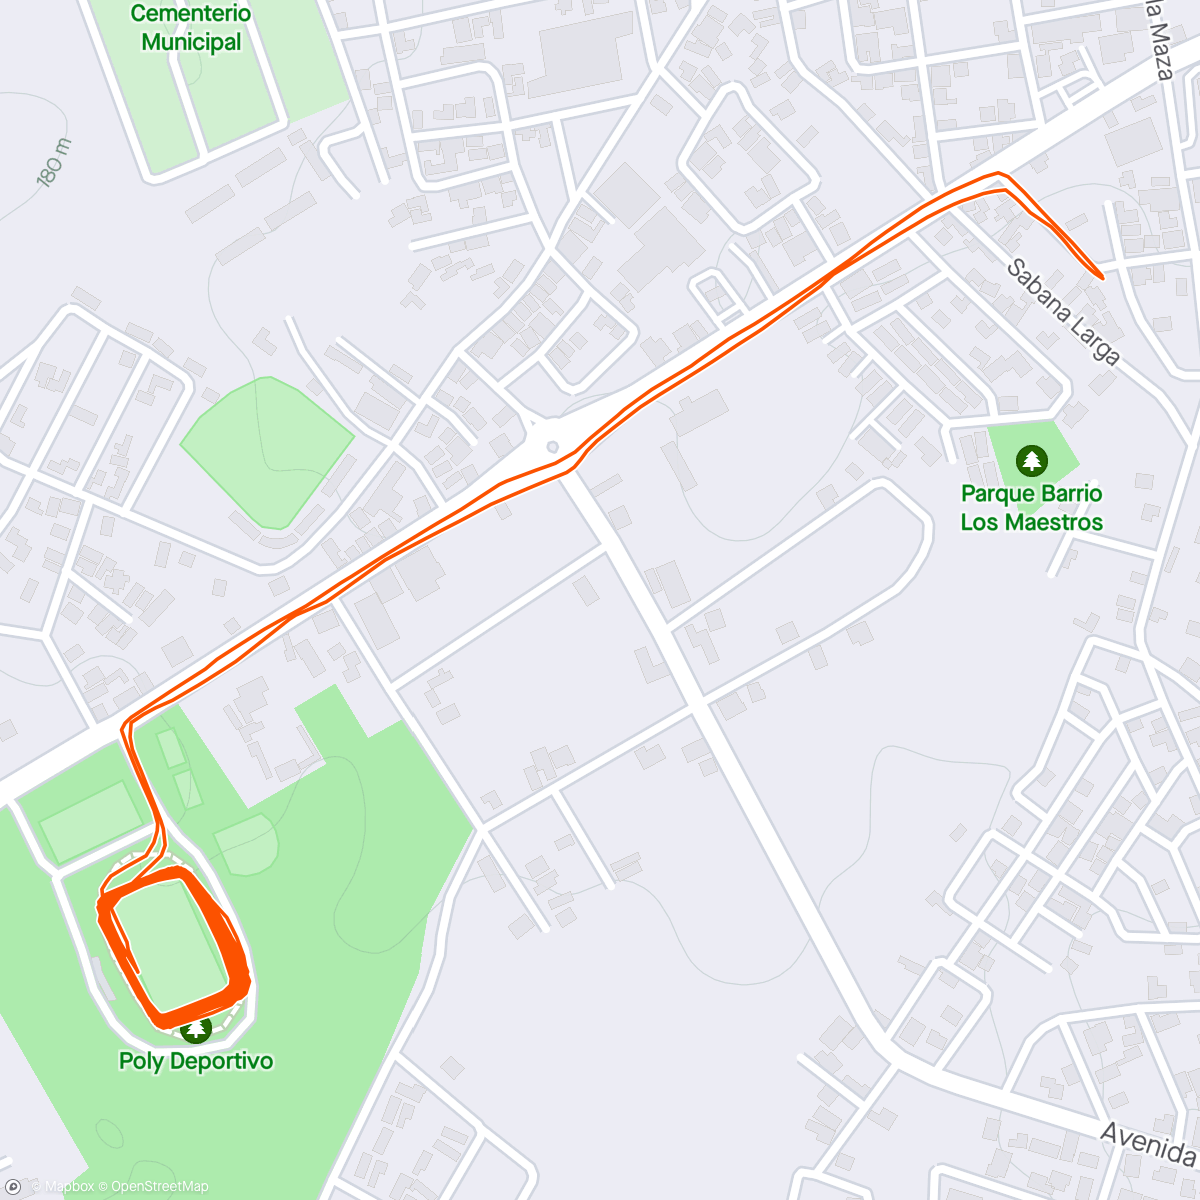 「Carrera por la tarde」活動的地圖